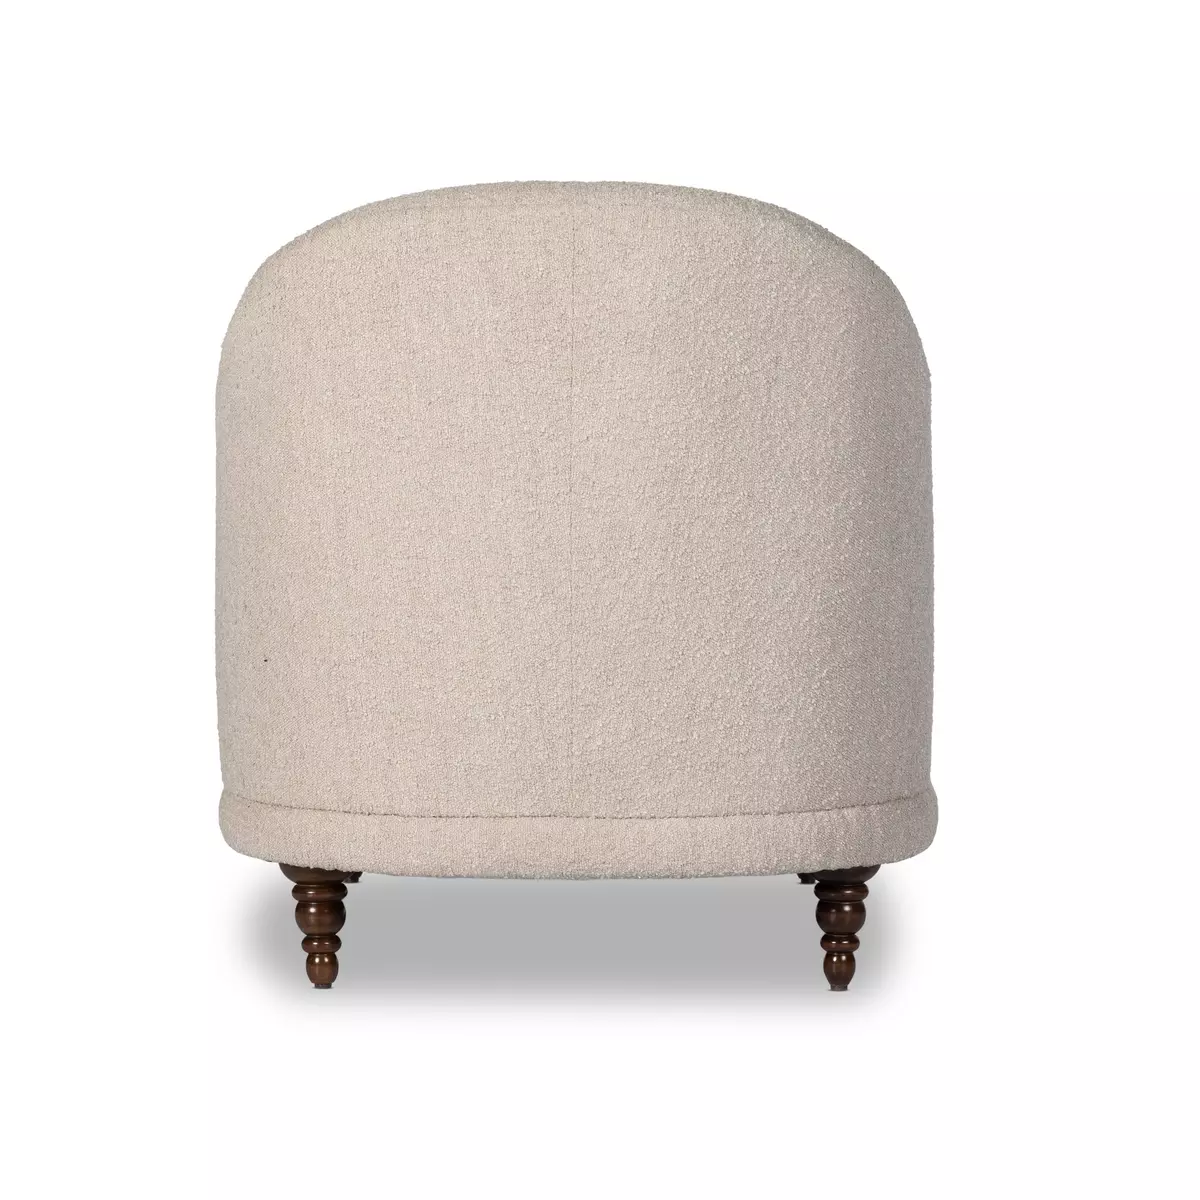 Petillia Sandstone Fabric Wedge Olympia Furniture